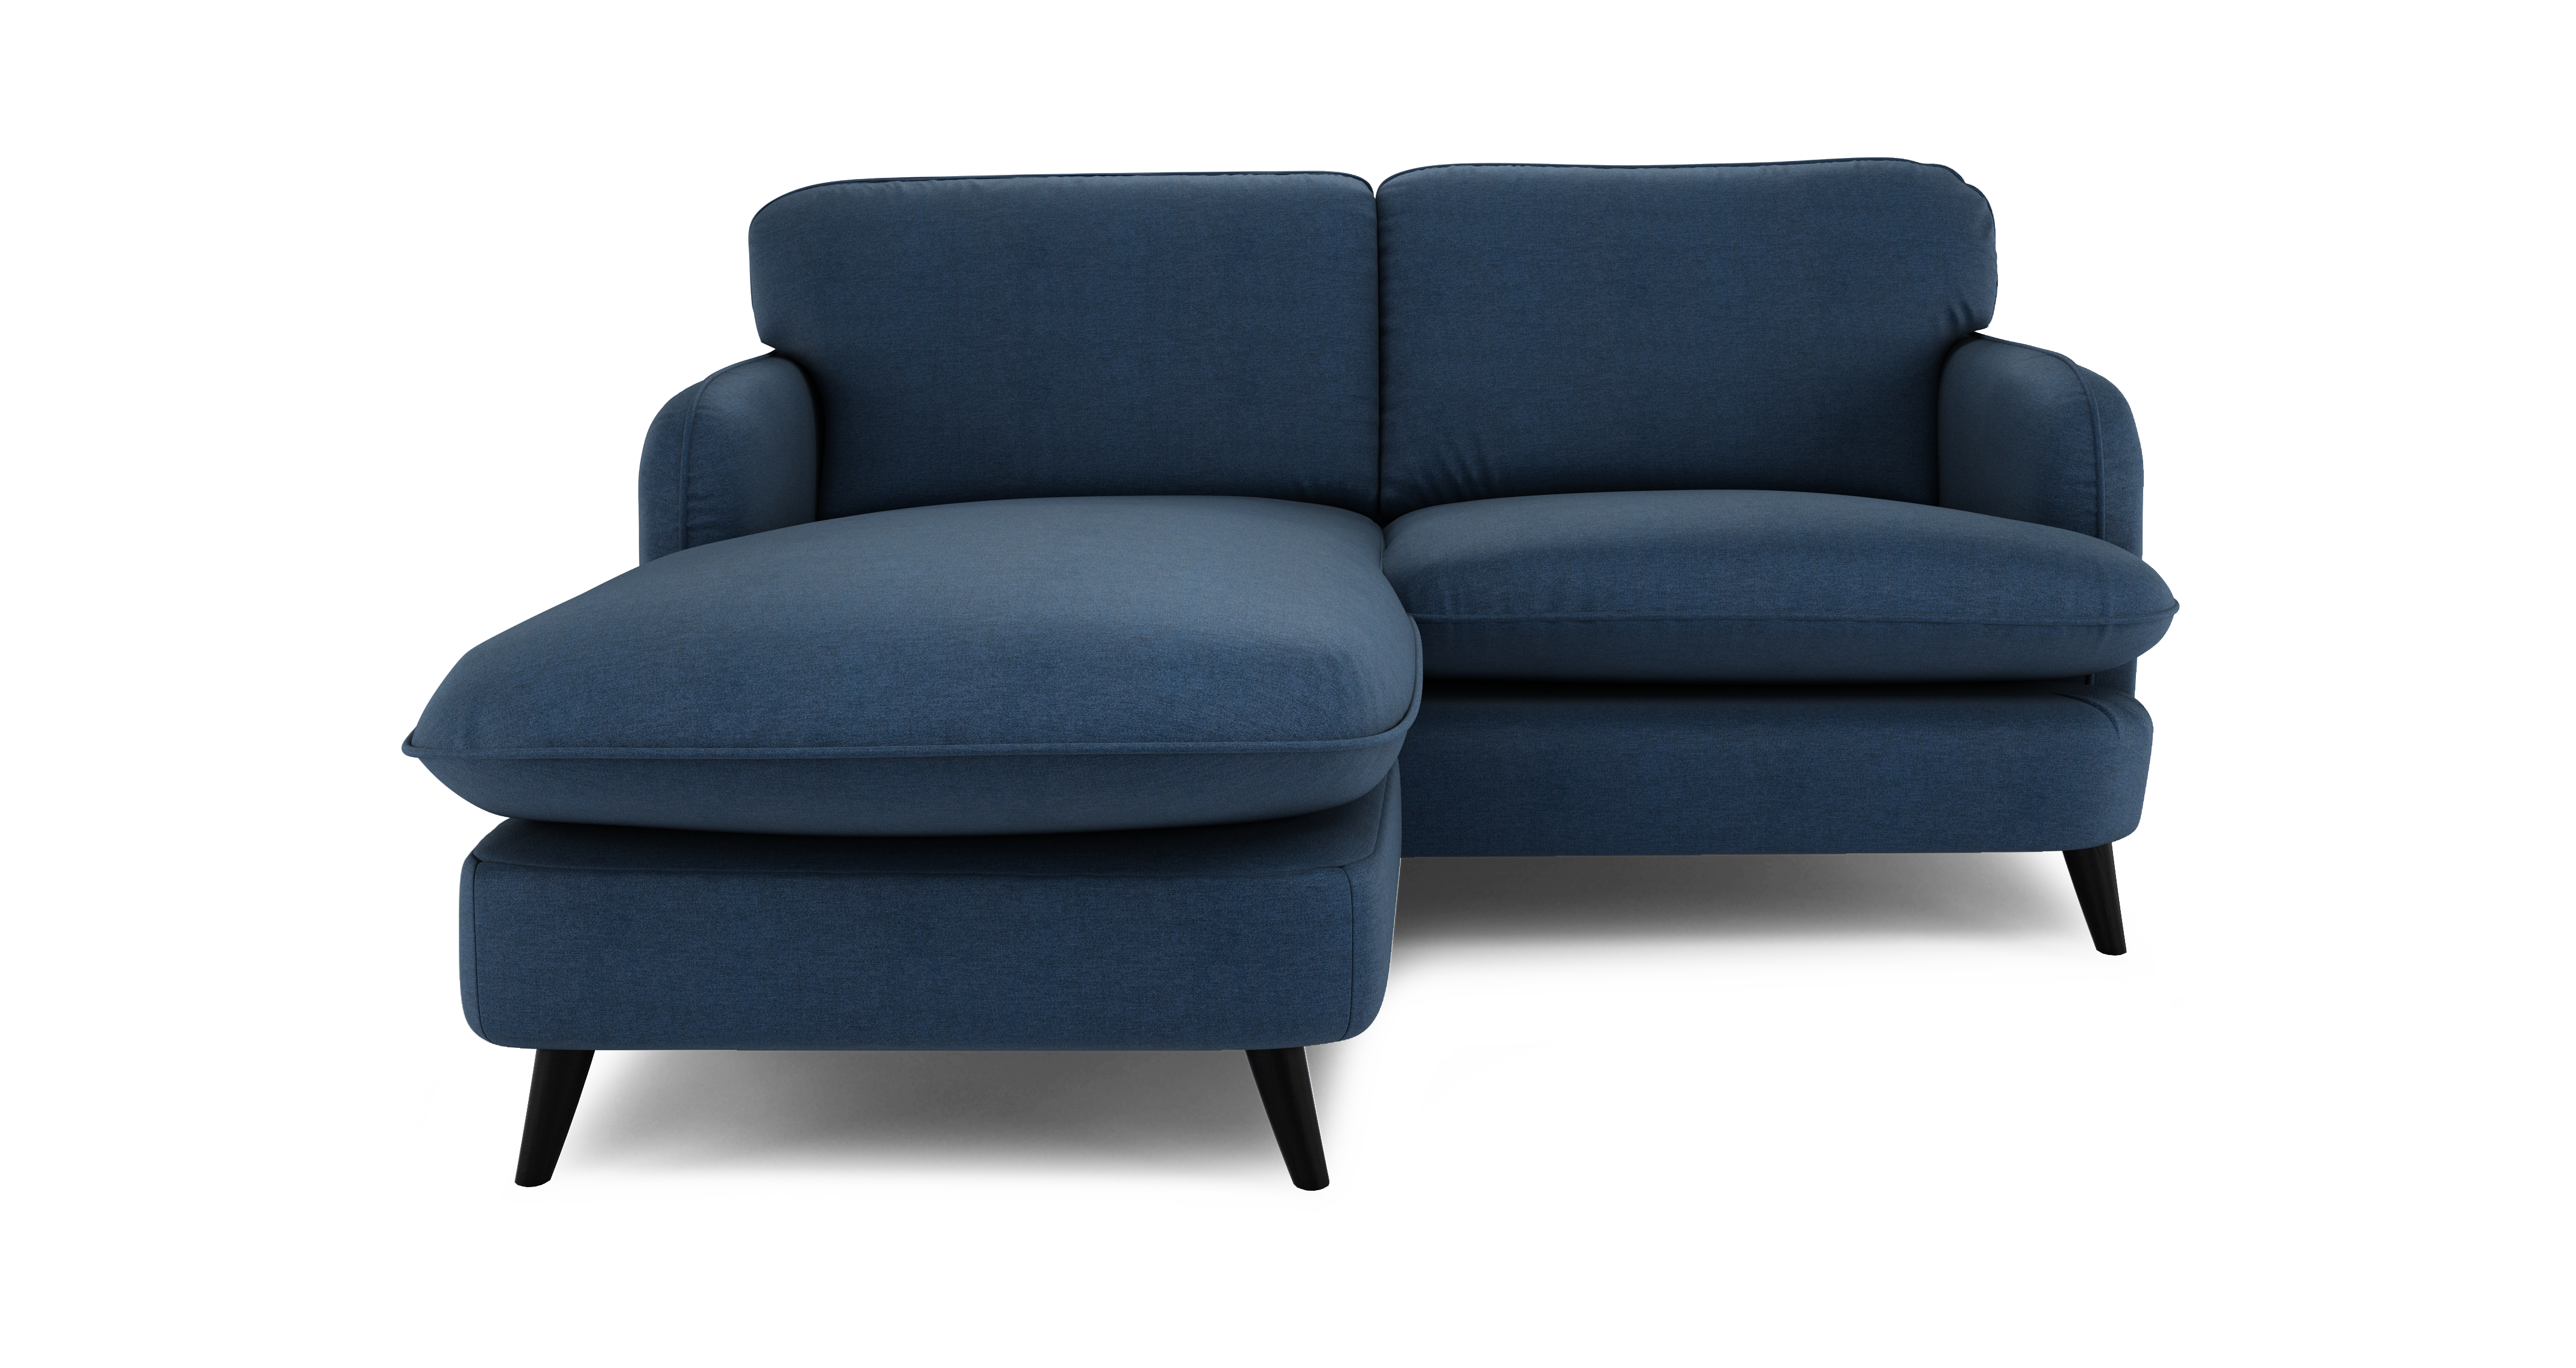 Lou corner sofa in indigo blue